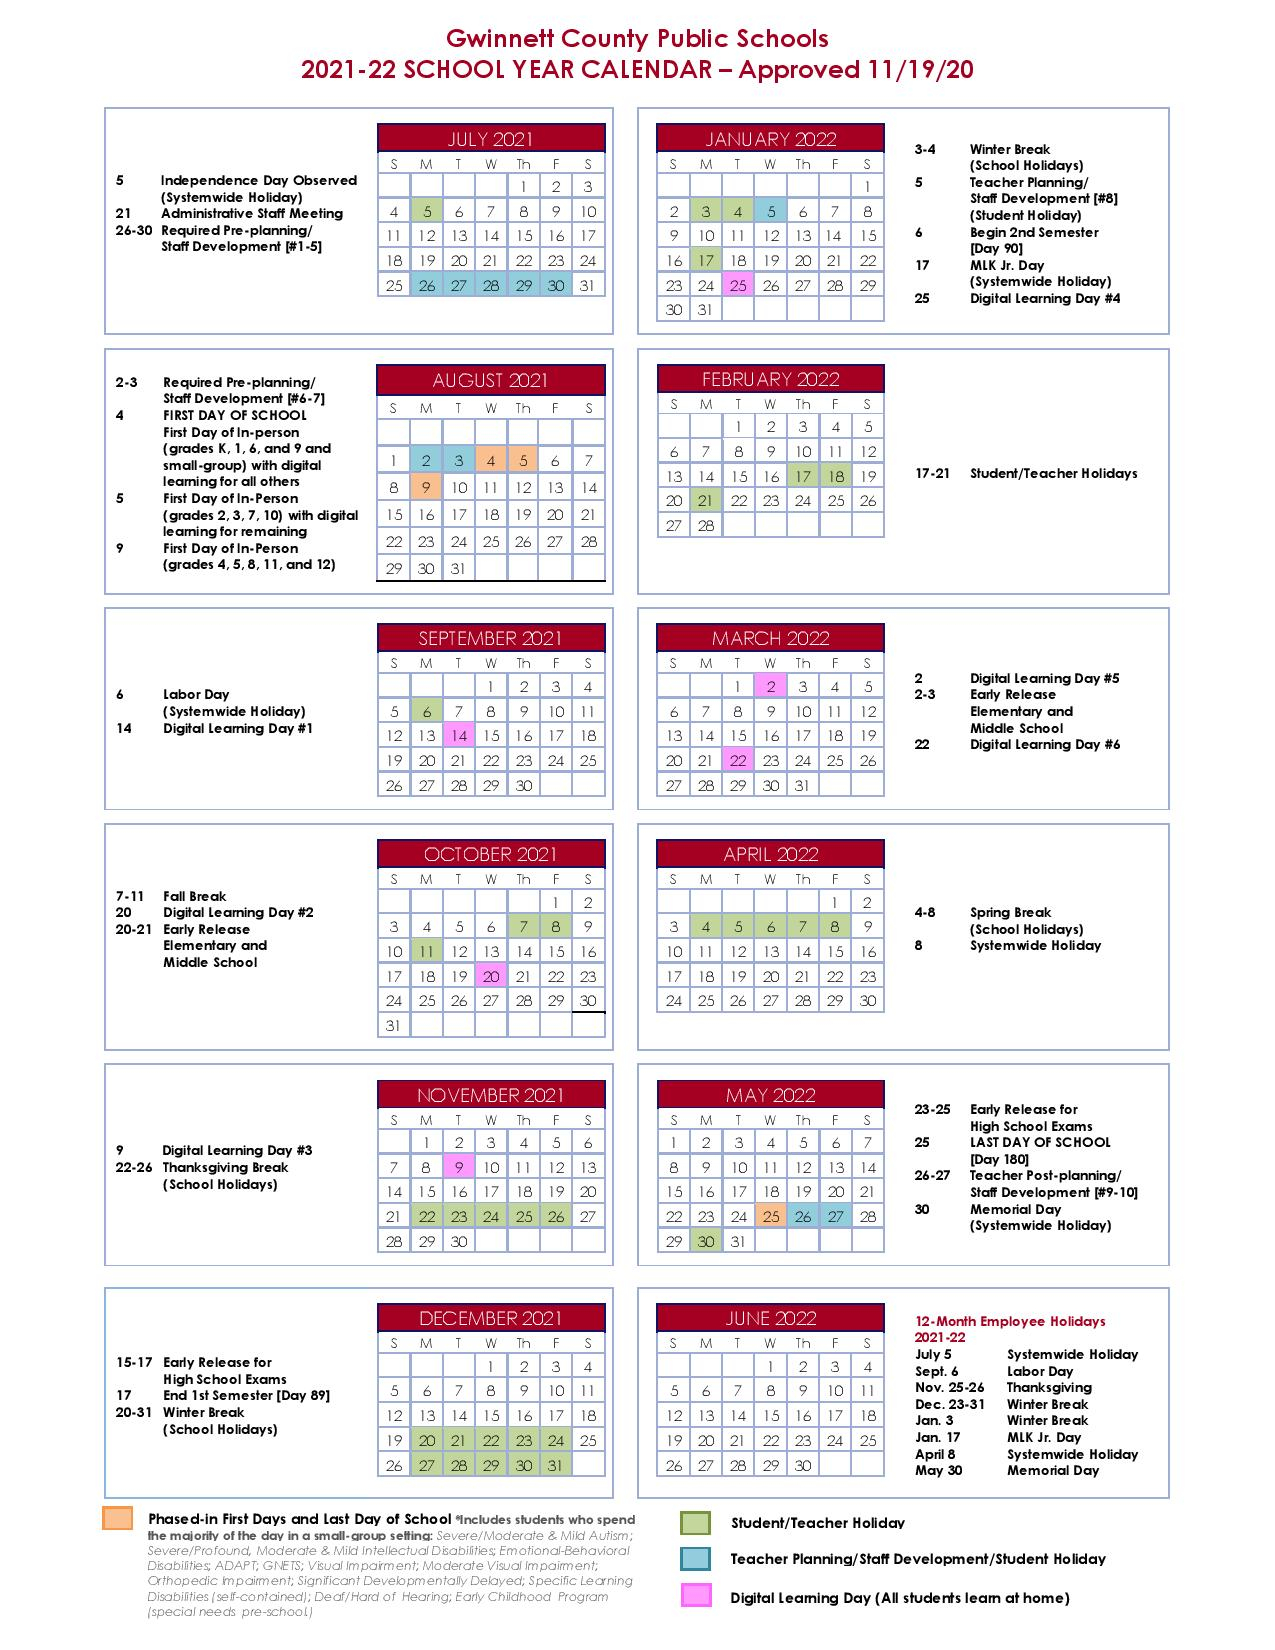 Gwinnett County School Calendar 2021 2022 Holidays